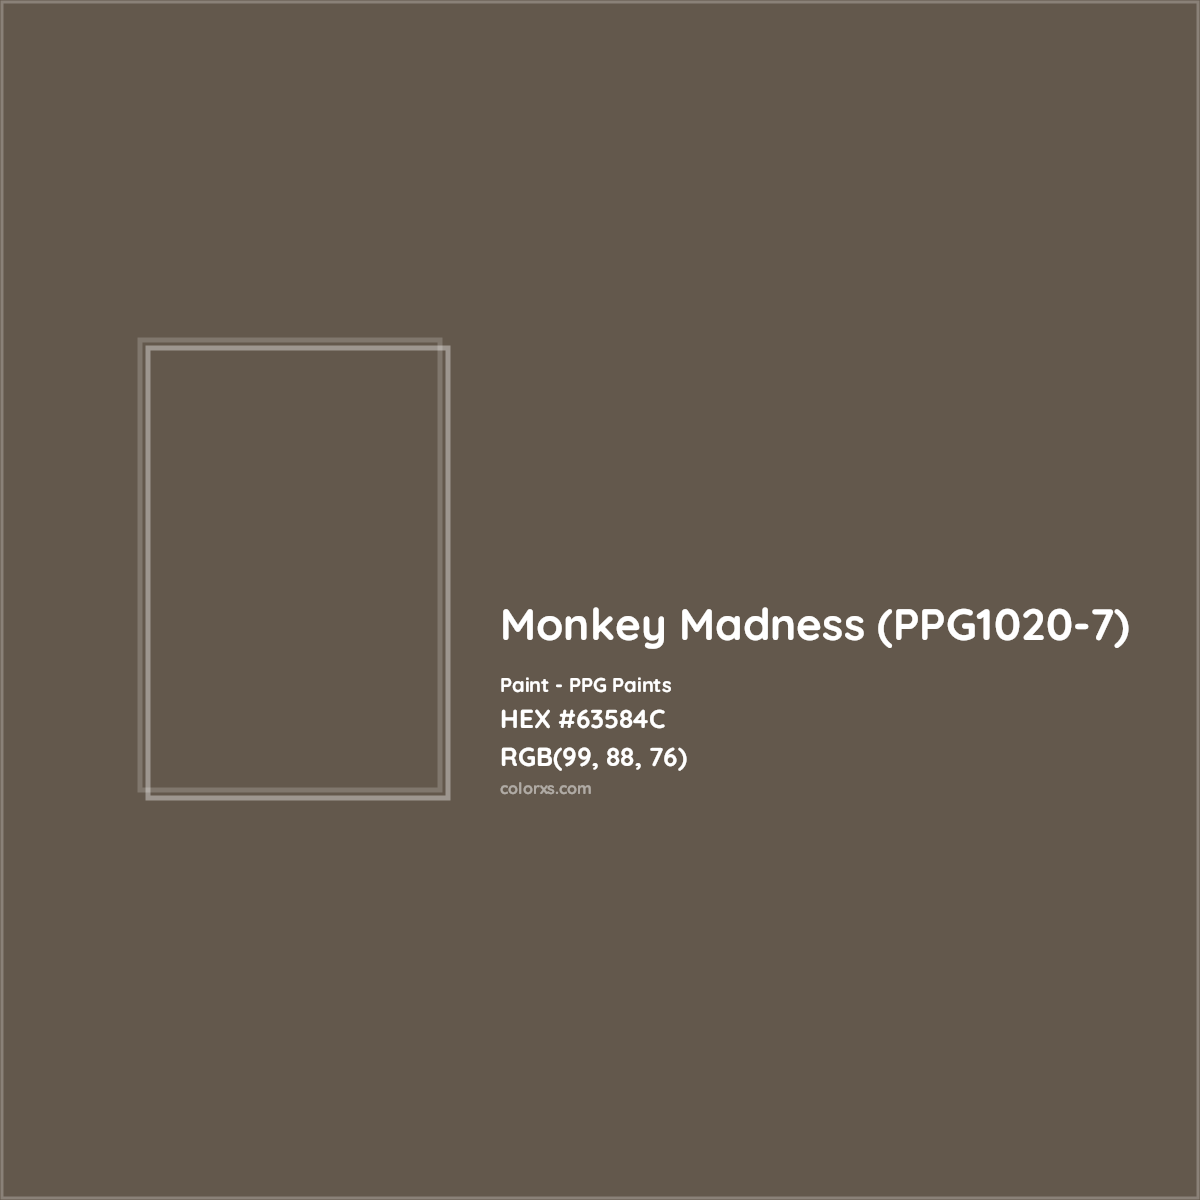 HEX #63584C Monkey Madness (PPG1020-7) Paint PPG Paints - Color Code